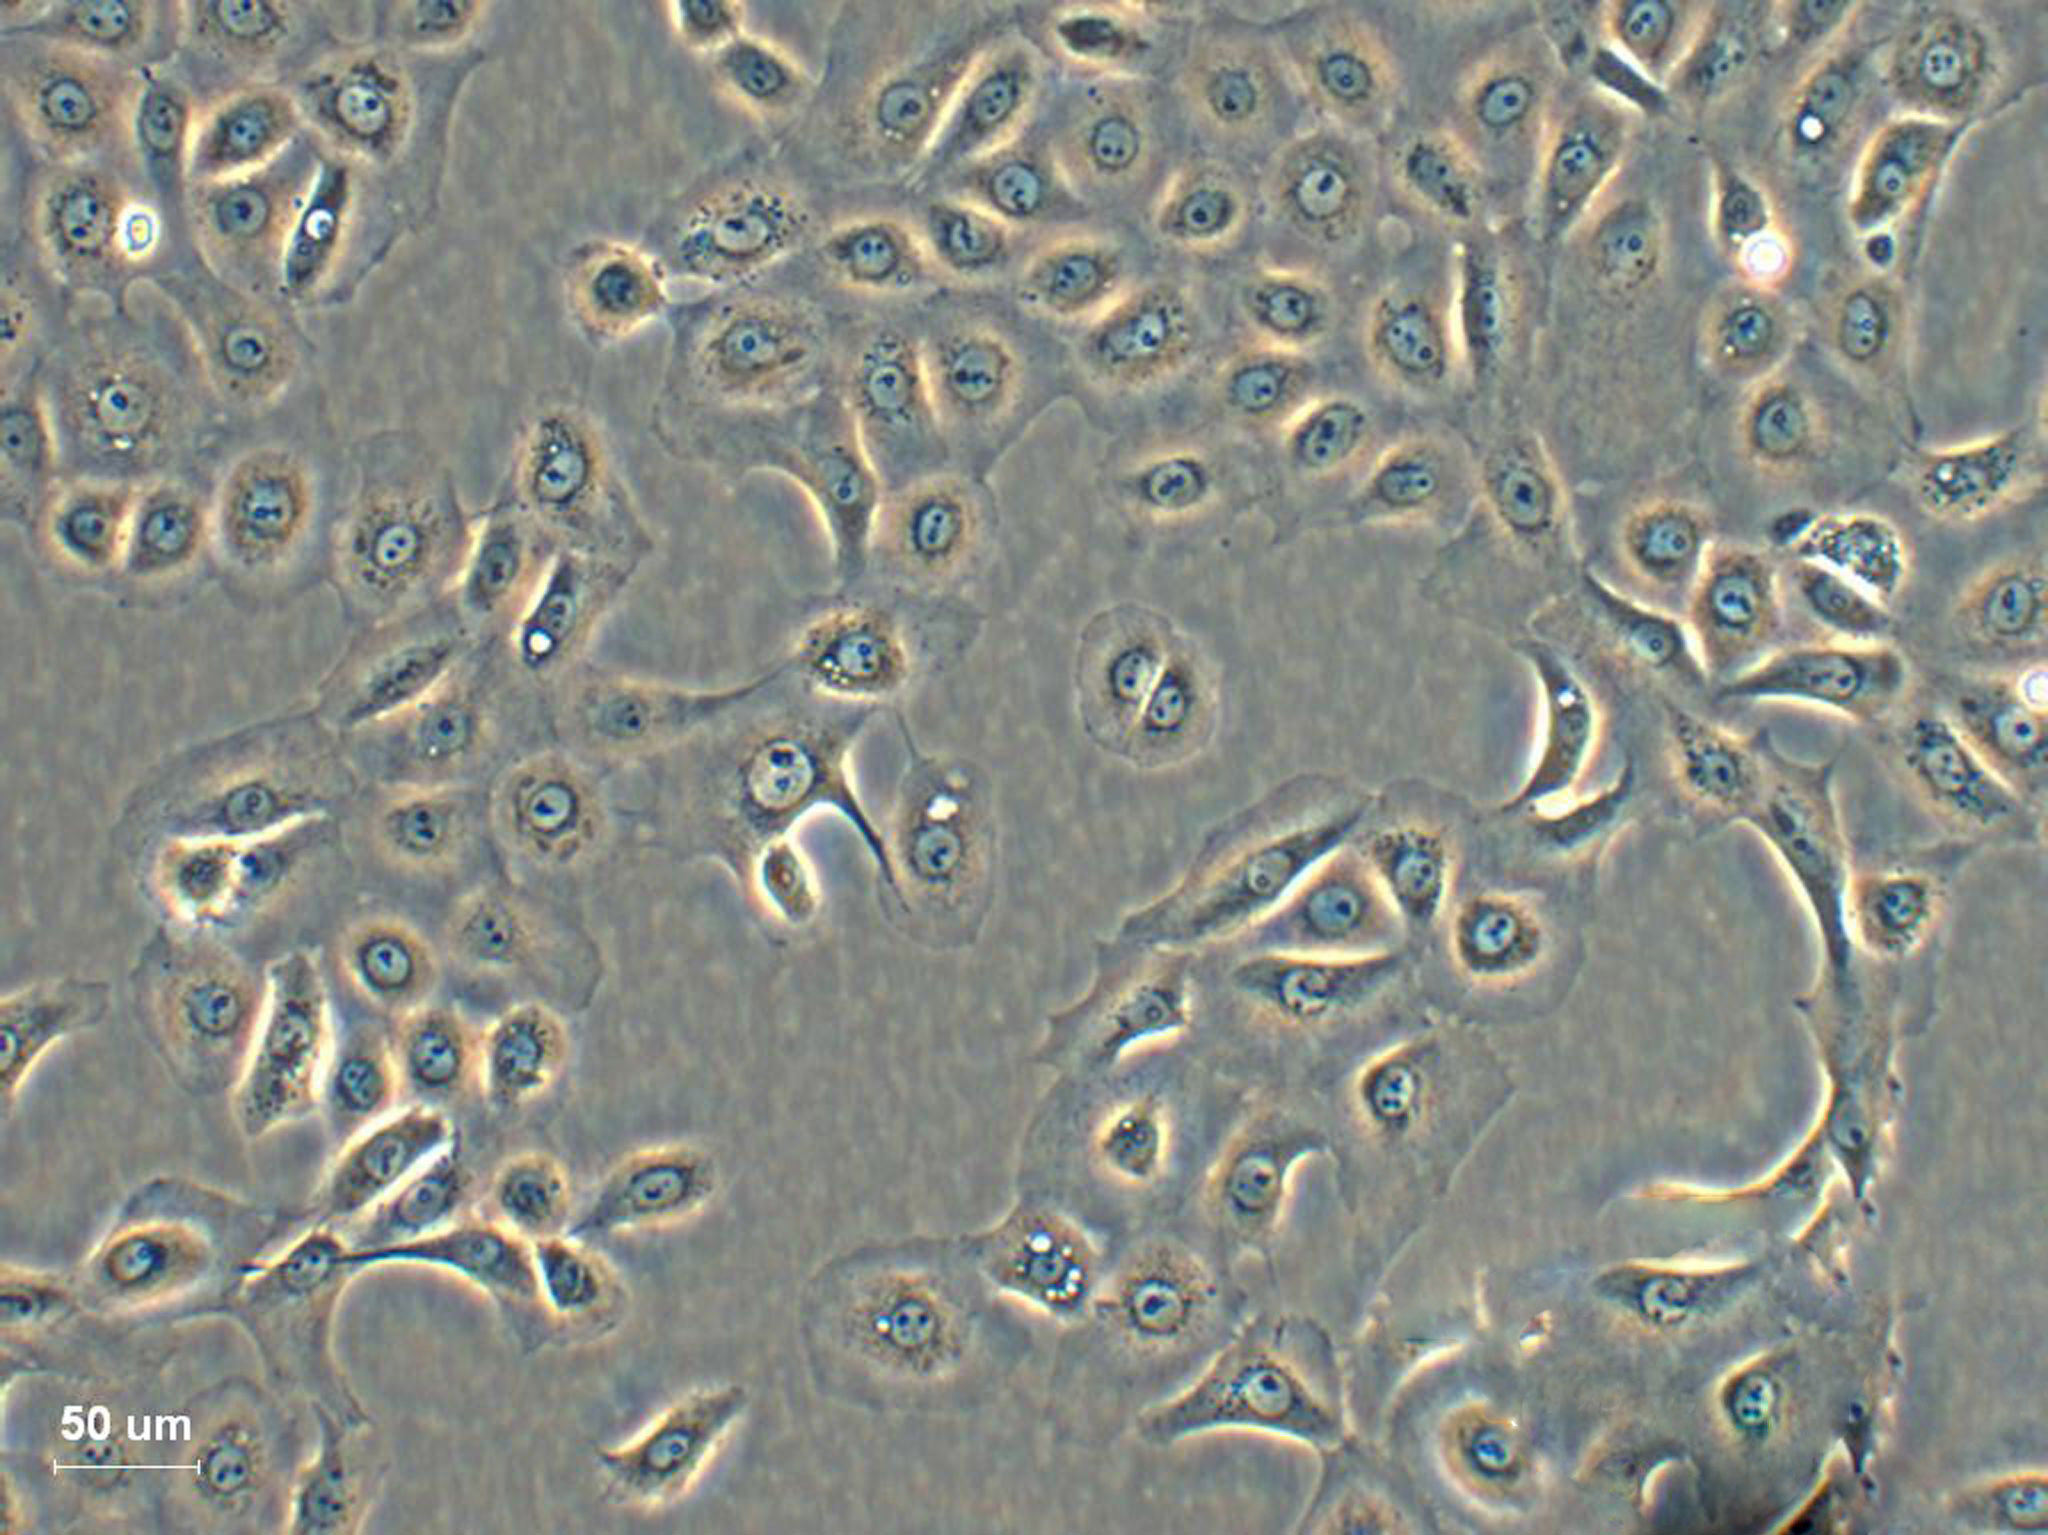 BT-20 epithelioid cells人乳腺癌细胞系